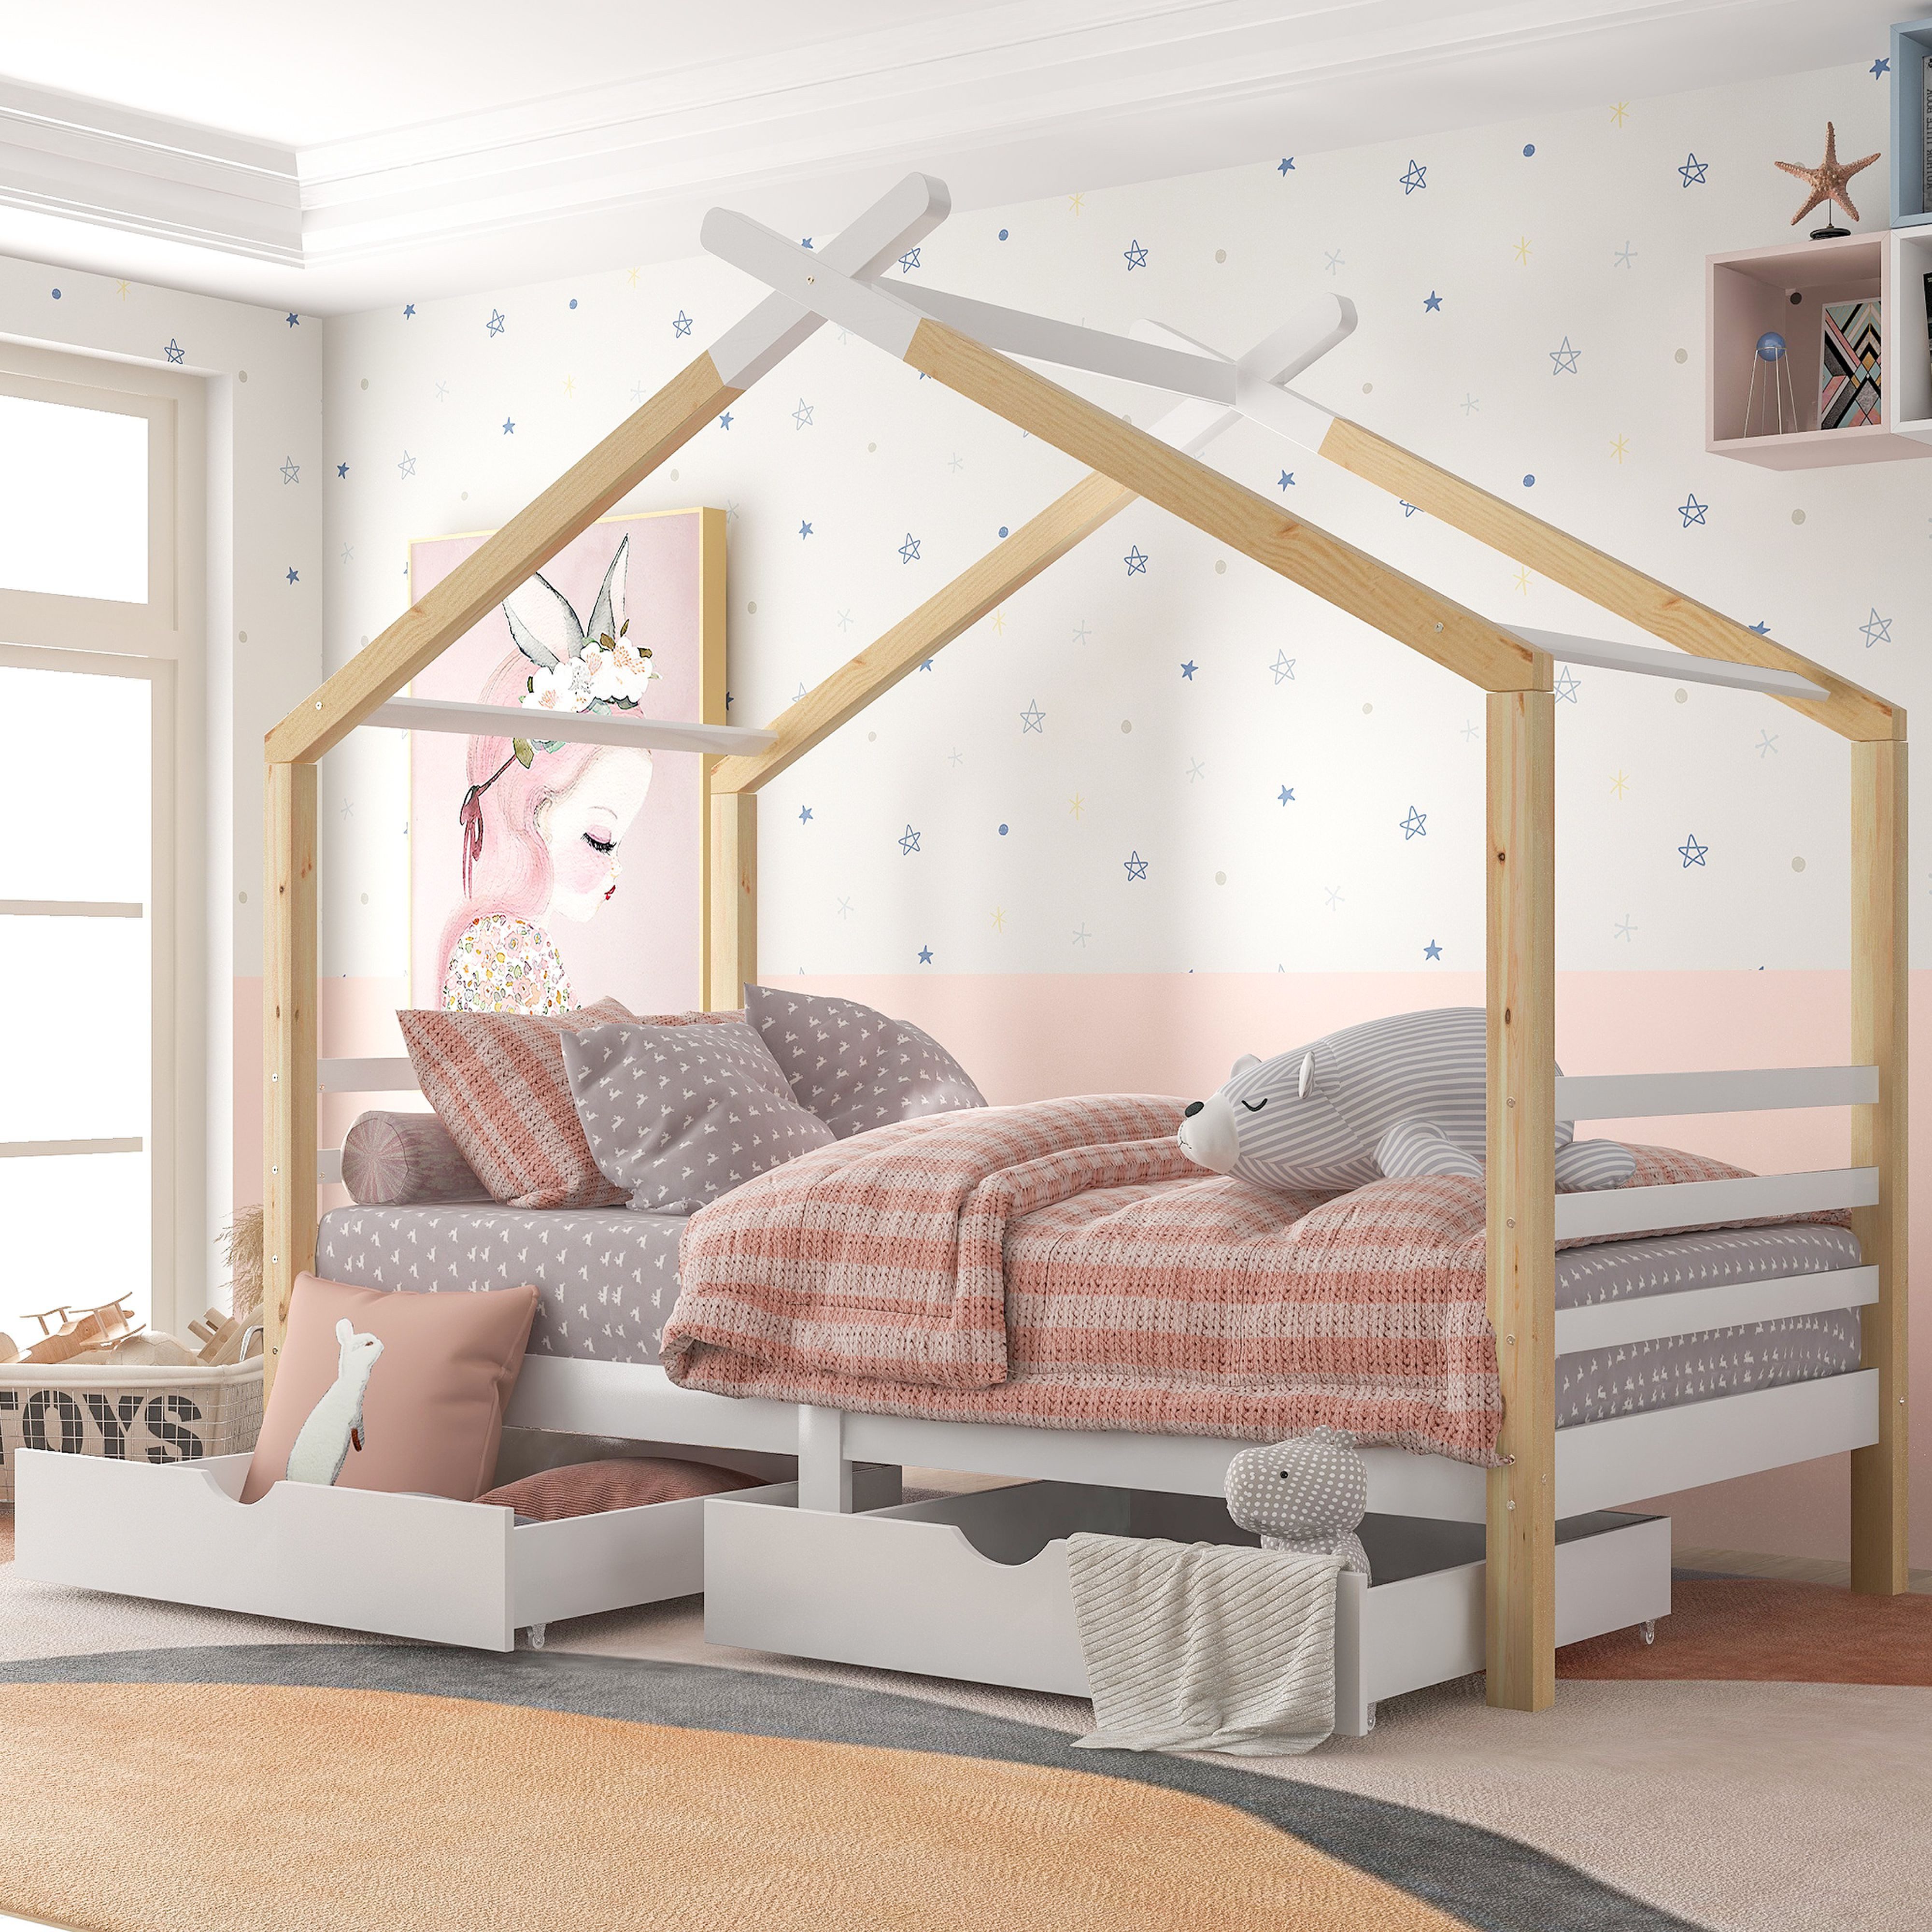 BlingBin Hausbett Kinderbett Einzelbett (Massivholz mit Lattenrost, Kiefernholz Hausbett), mit Schubladen, weiß+holzfarbe, 90x200cm